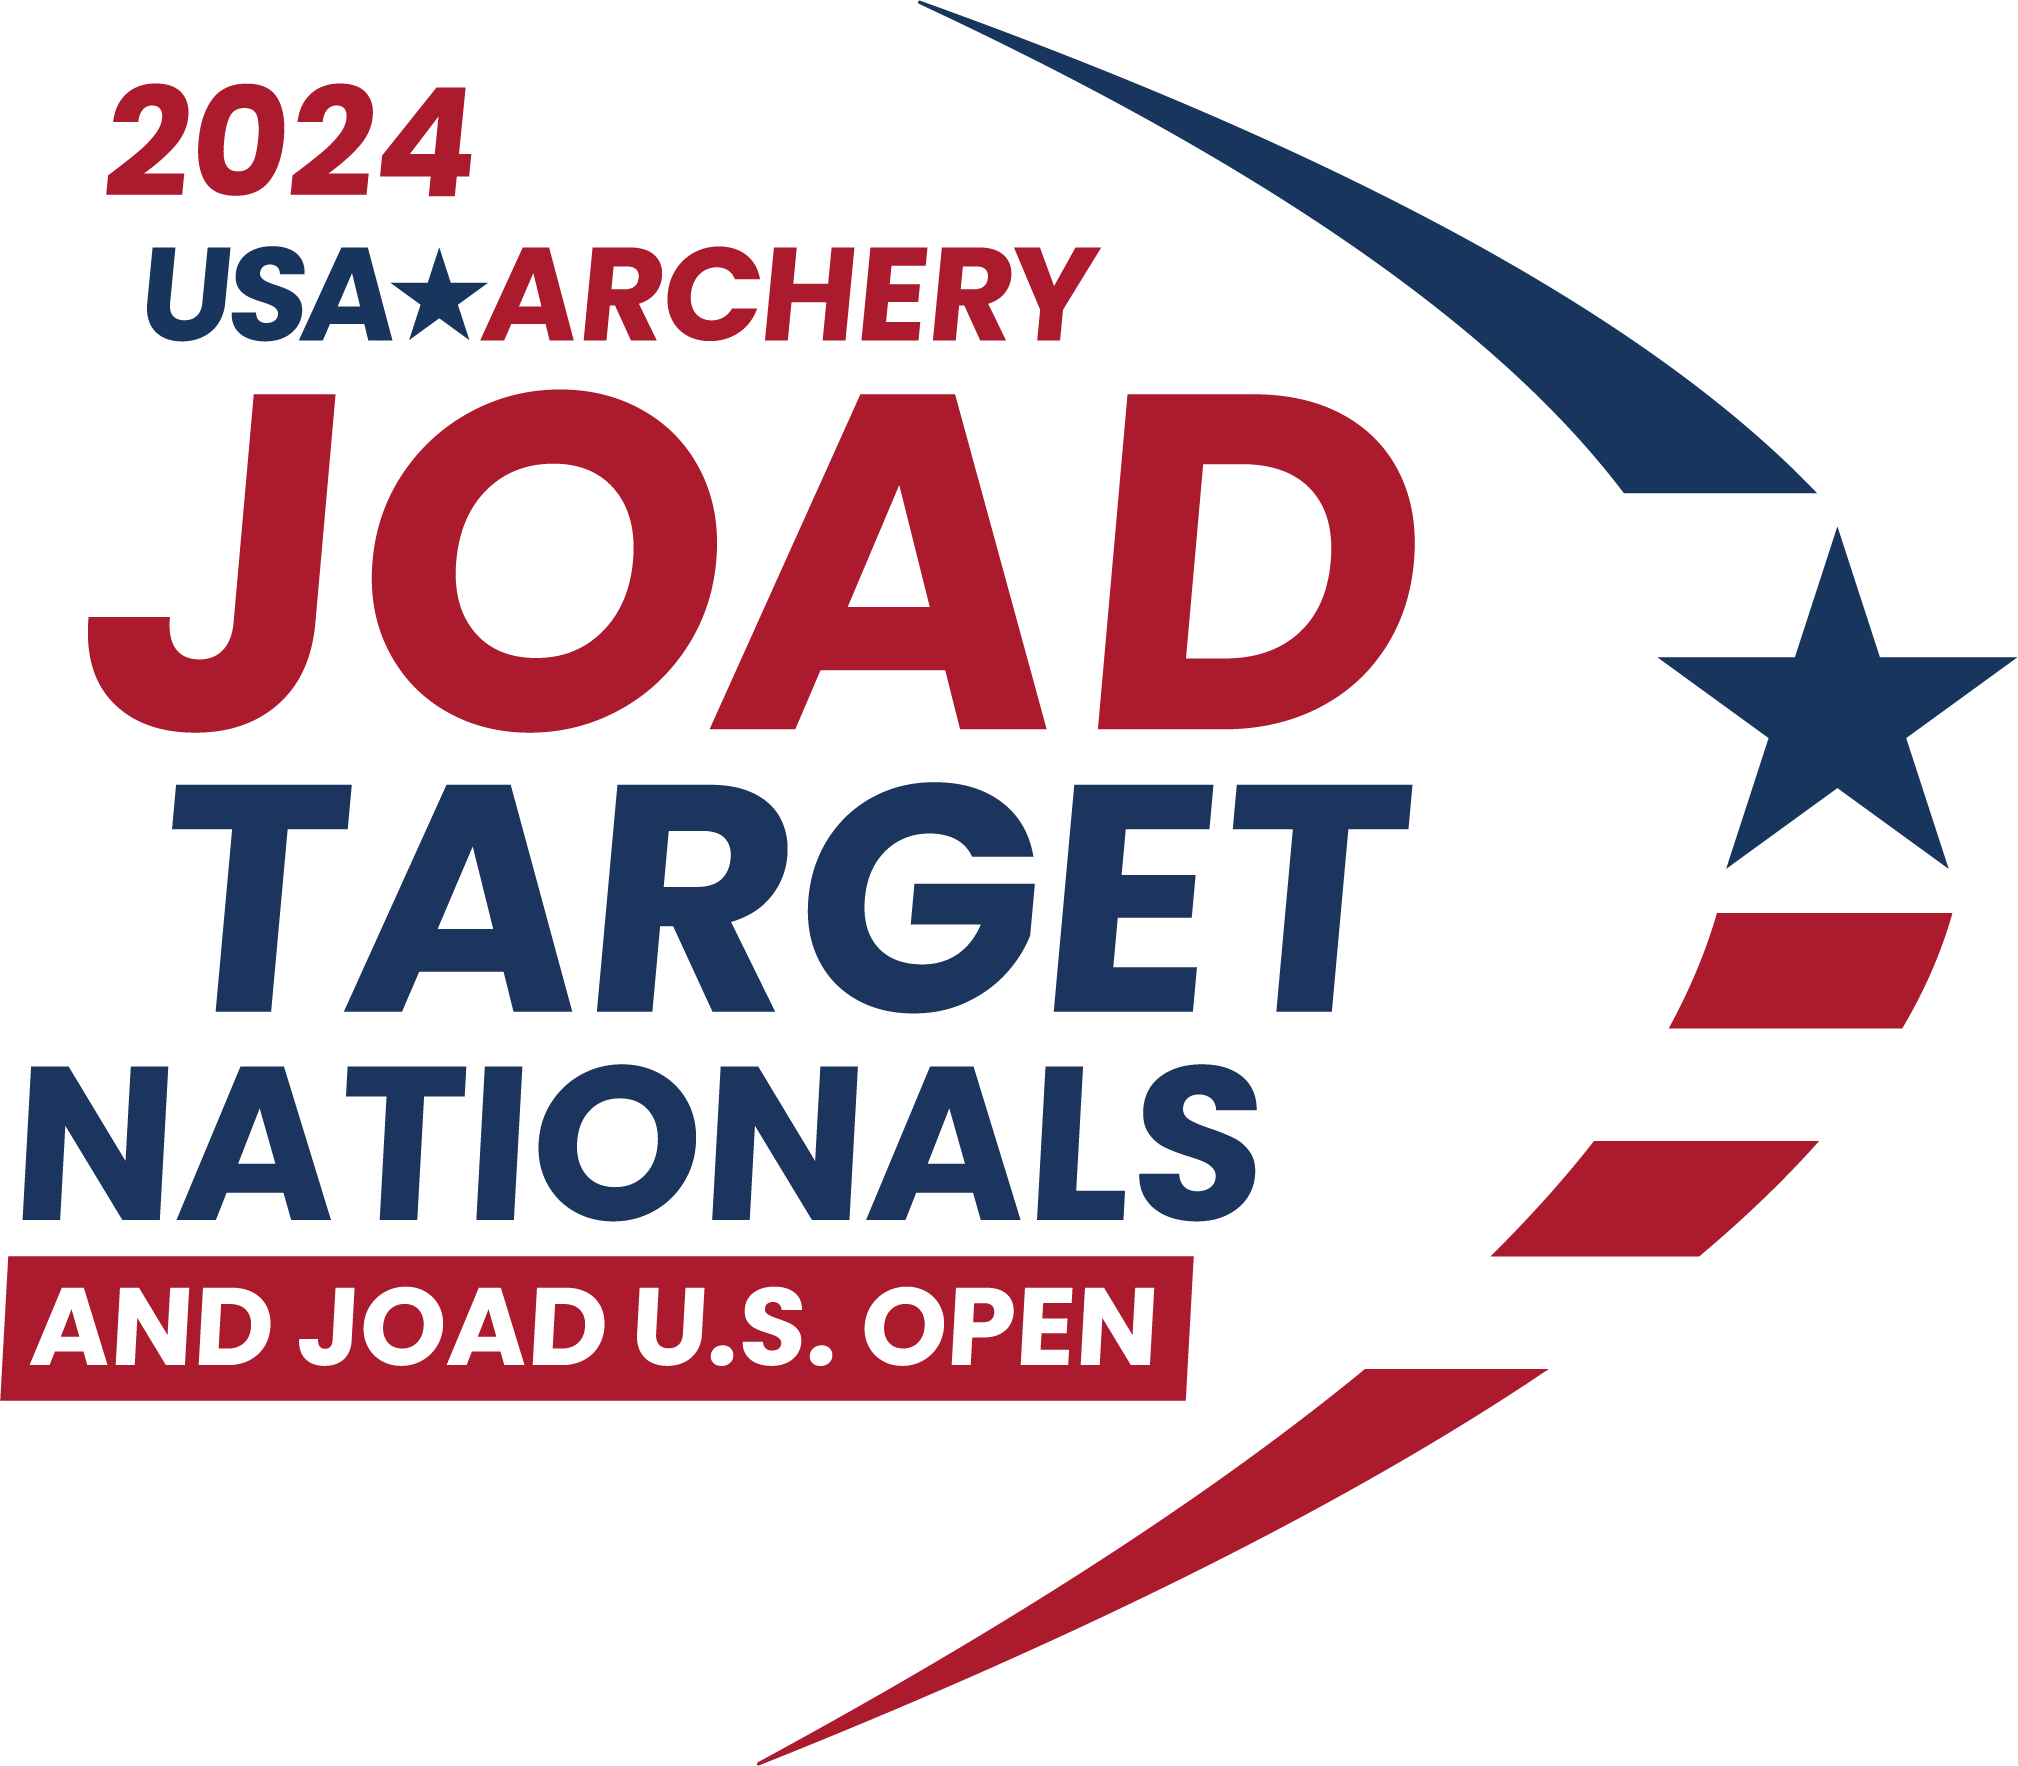 JOAD Target Nationals and JOAD U.S. Open